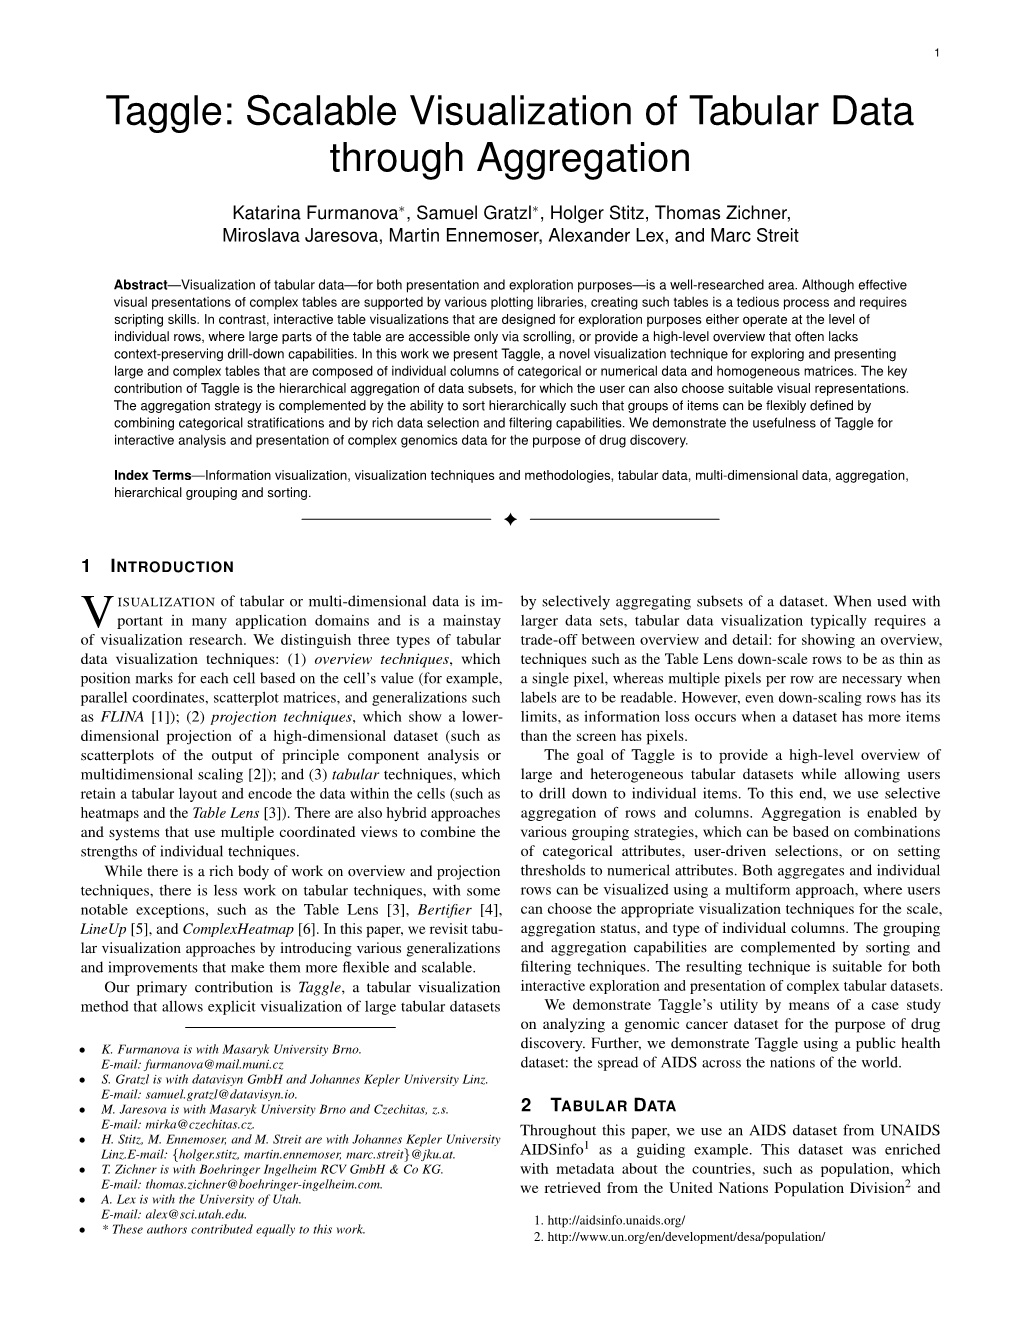 Taggle: Scalable Visualization of Tabular Data Through Aggregation